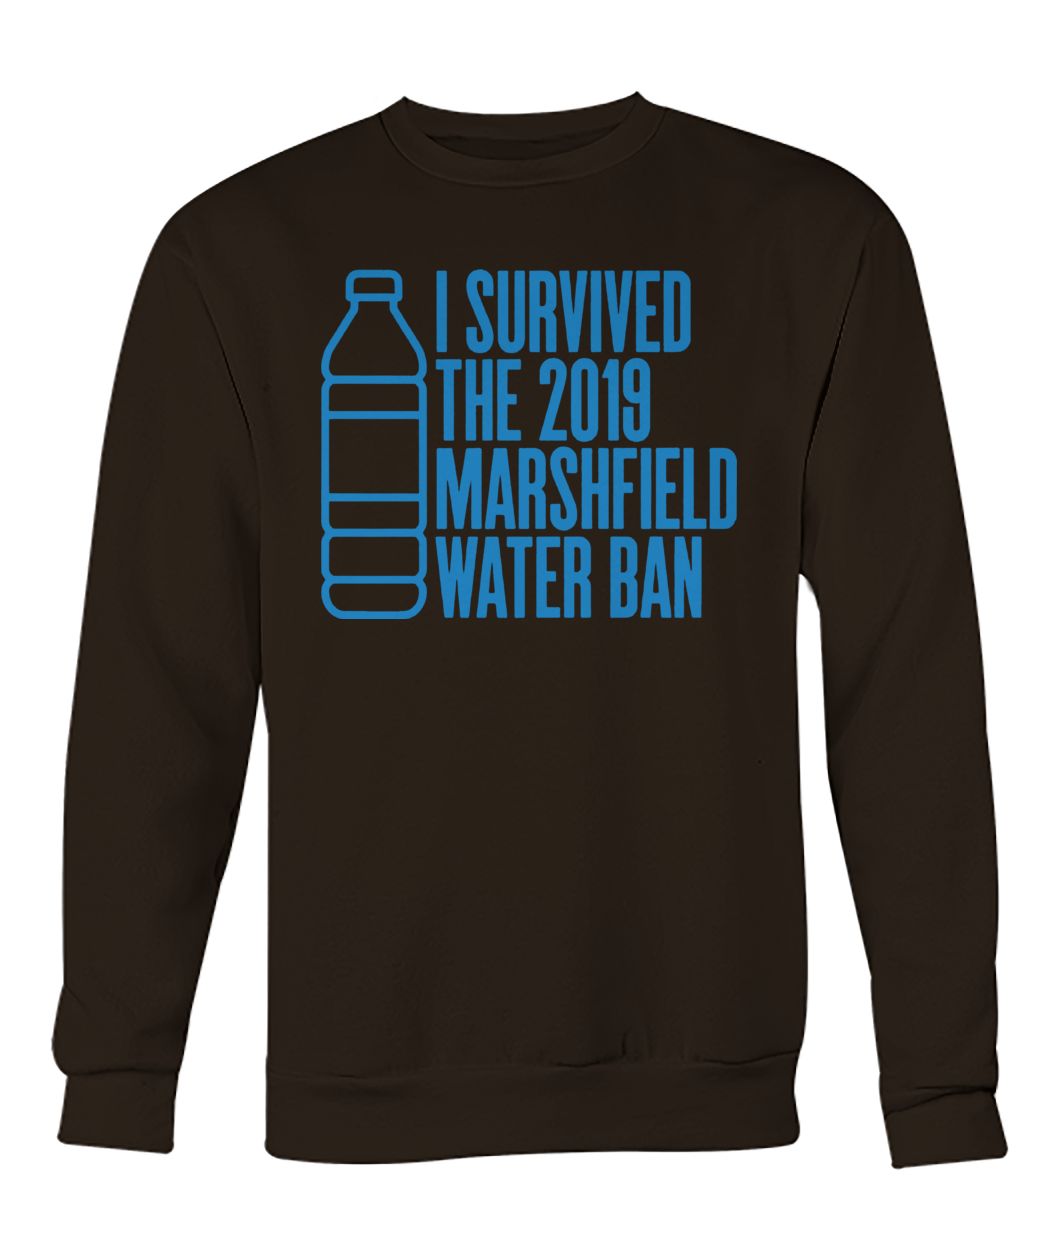 I survived the 2019 marshfield water ban crew neck sweatshirt